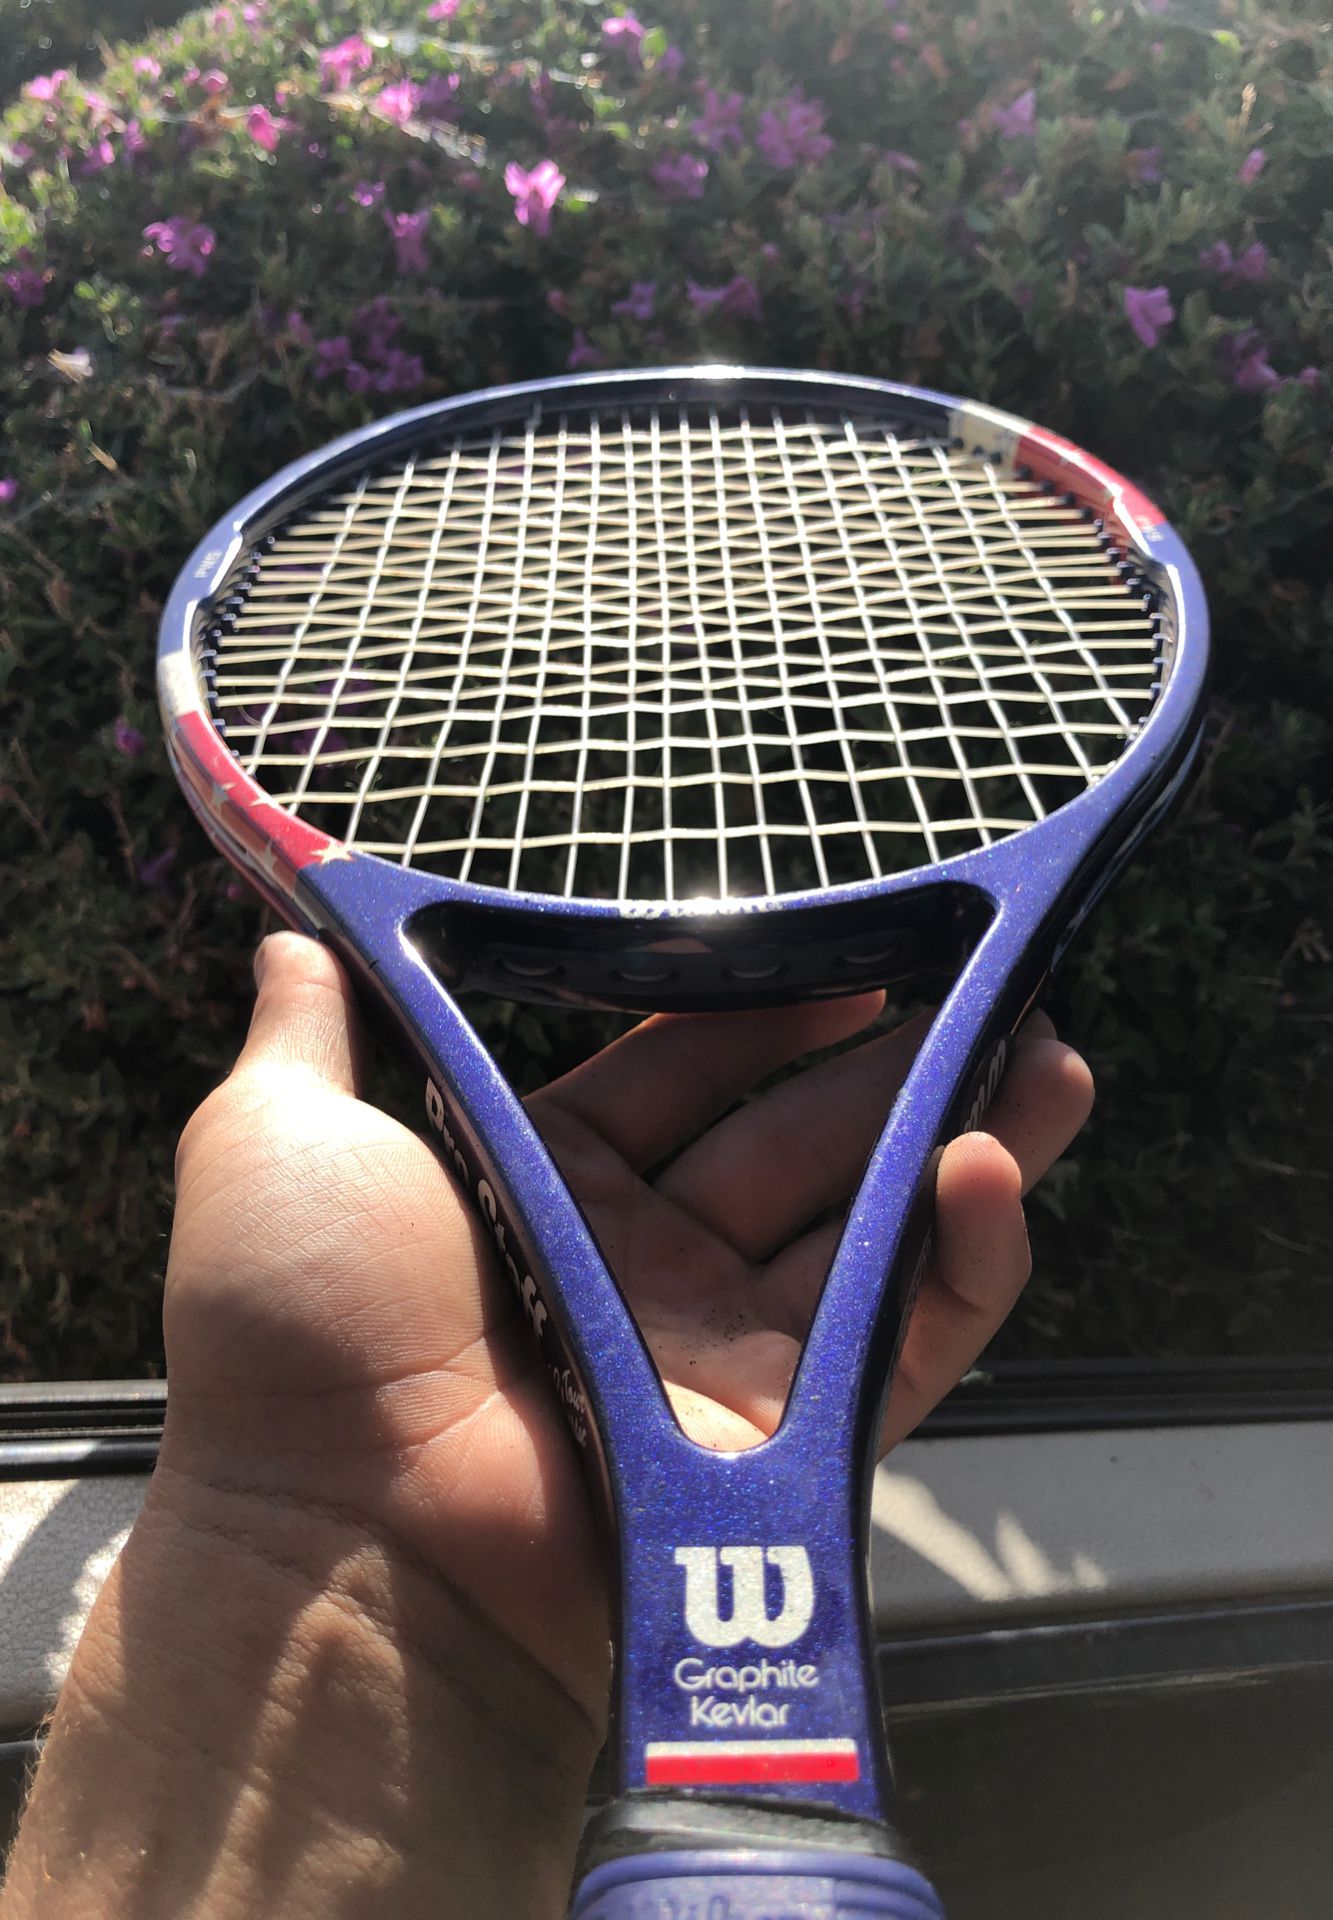 Pro Staff - Graphite Kevlar tennis Racket - town classic 6.6